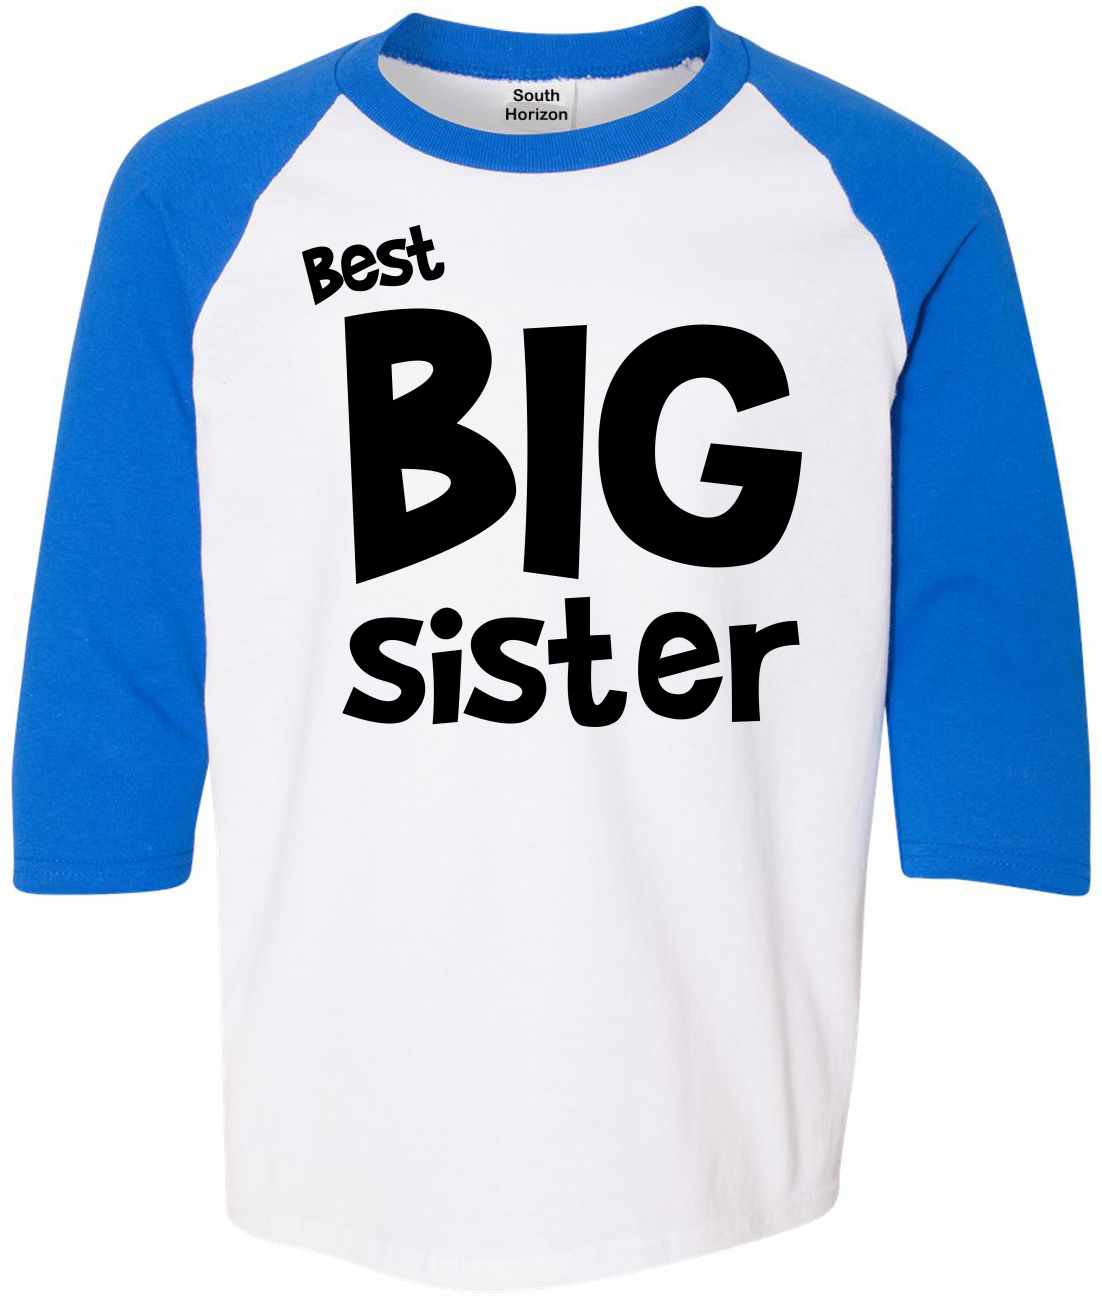 Best Big Sister on Youth Baseball Shirt (#1139-212)